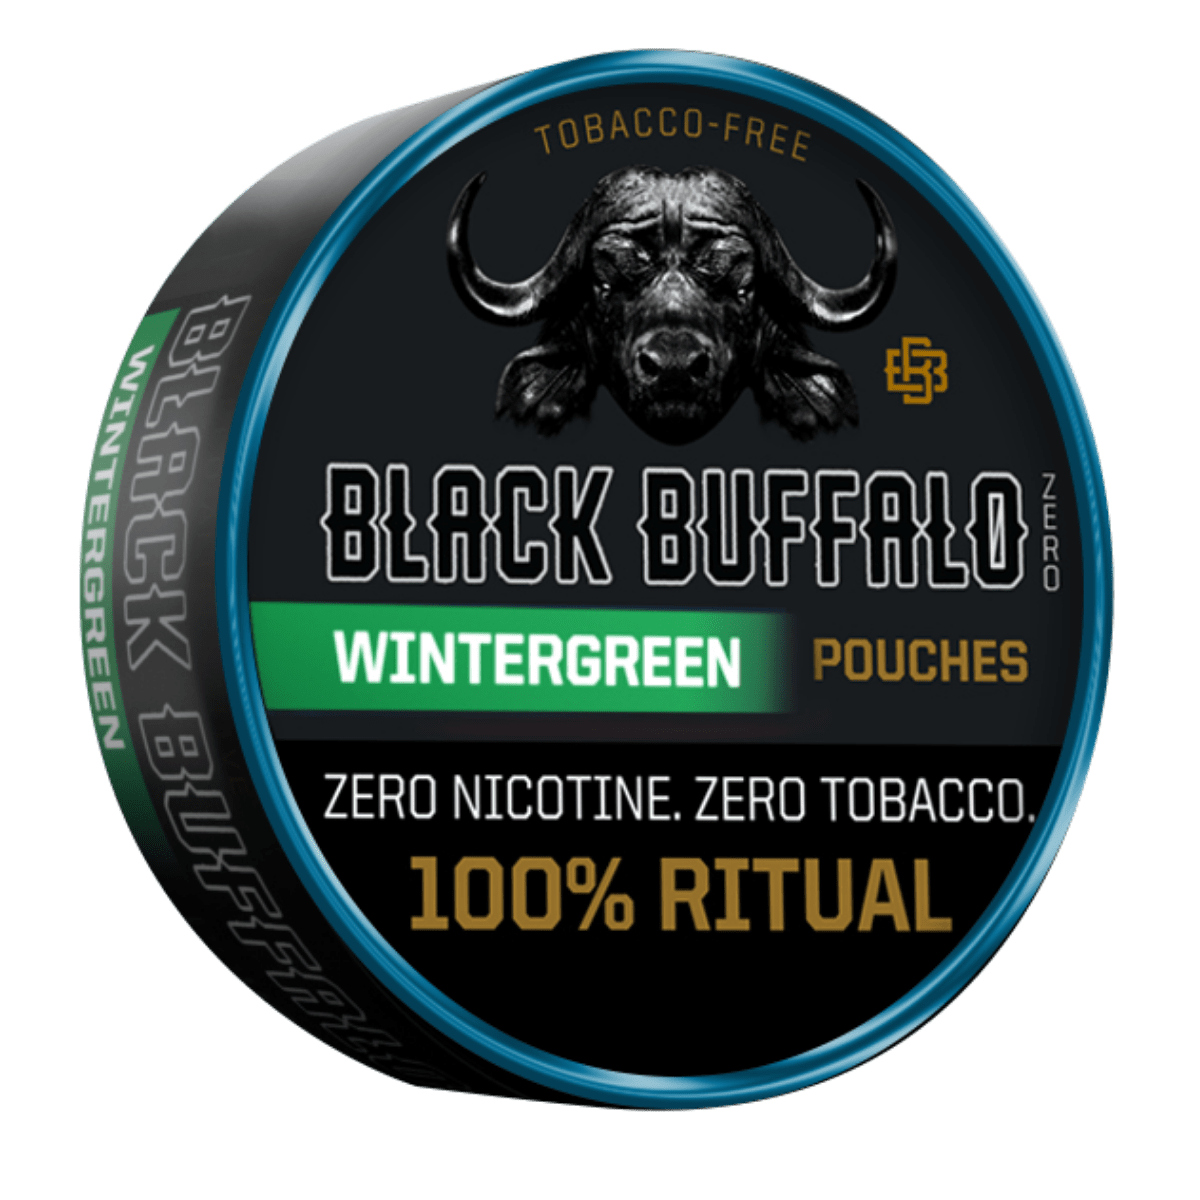 Wintergreen ZERO Pouches | Tobacco Free | Black Buffalo